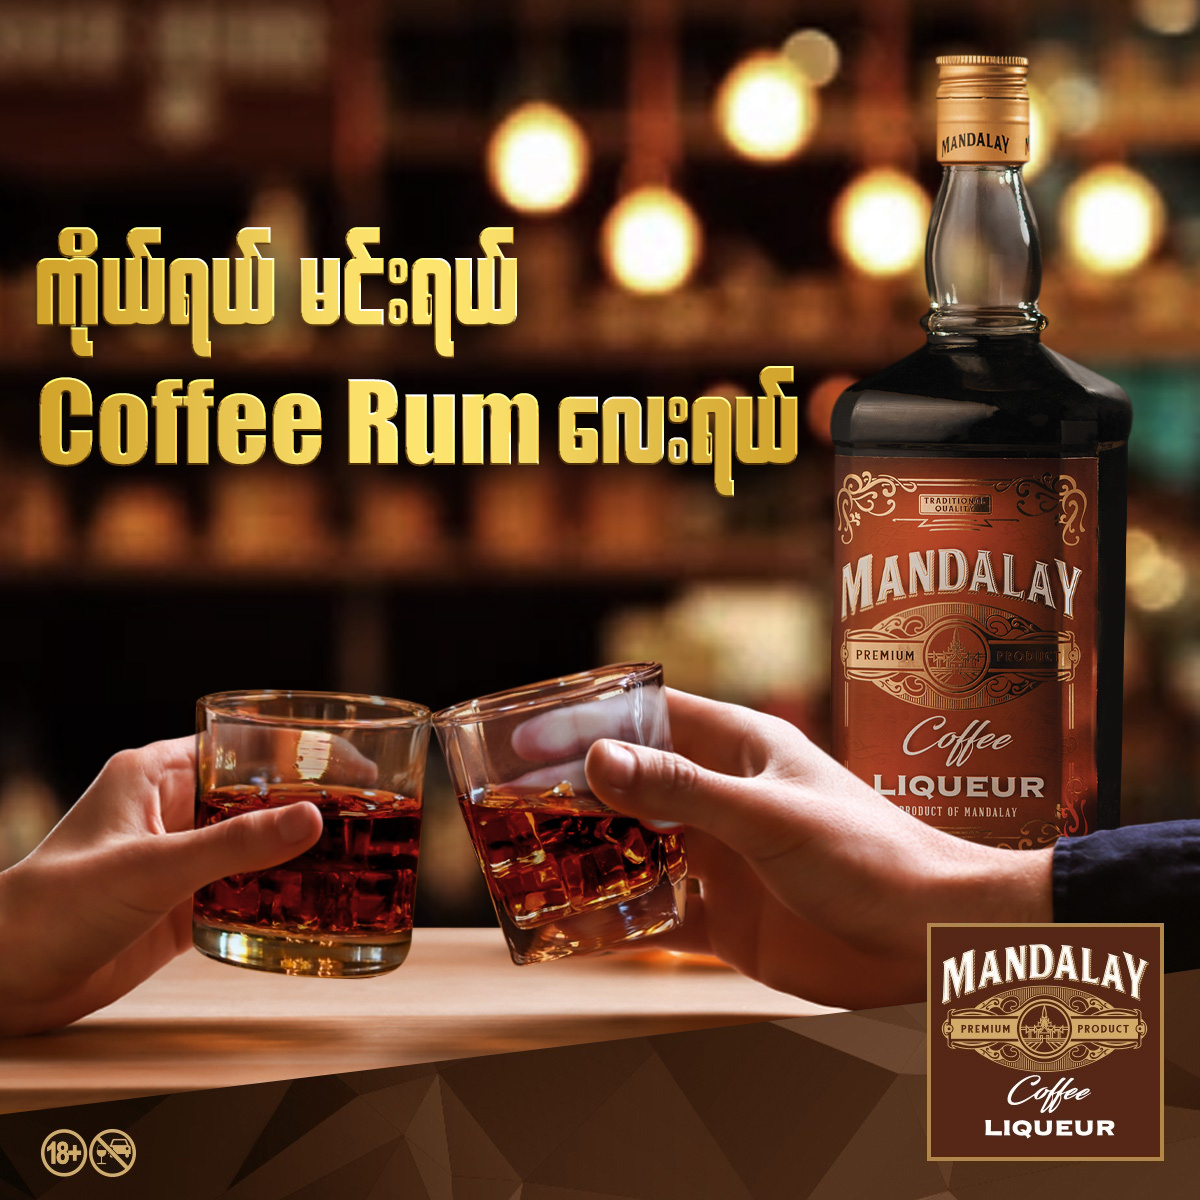 The Mandalay Coffee Liqueur